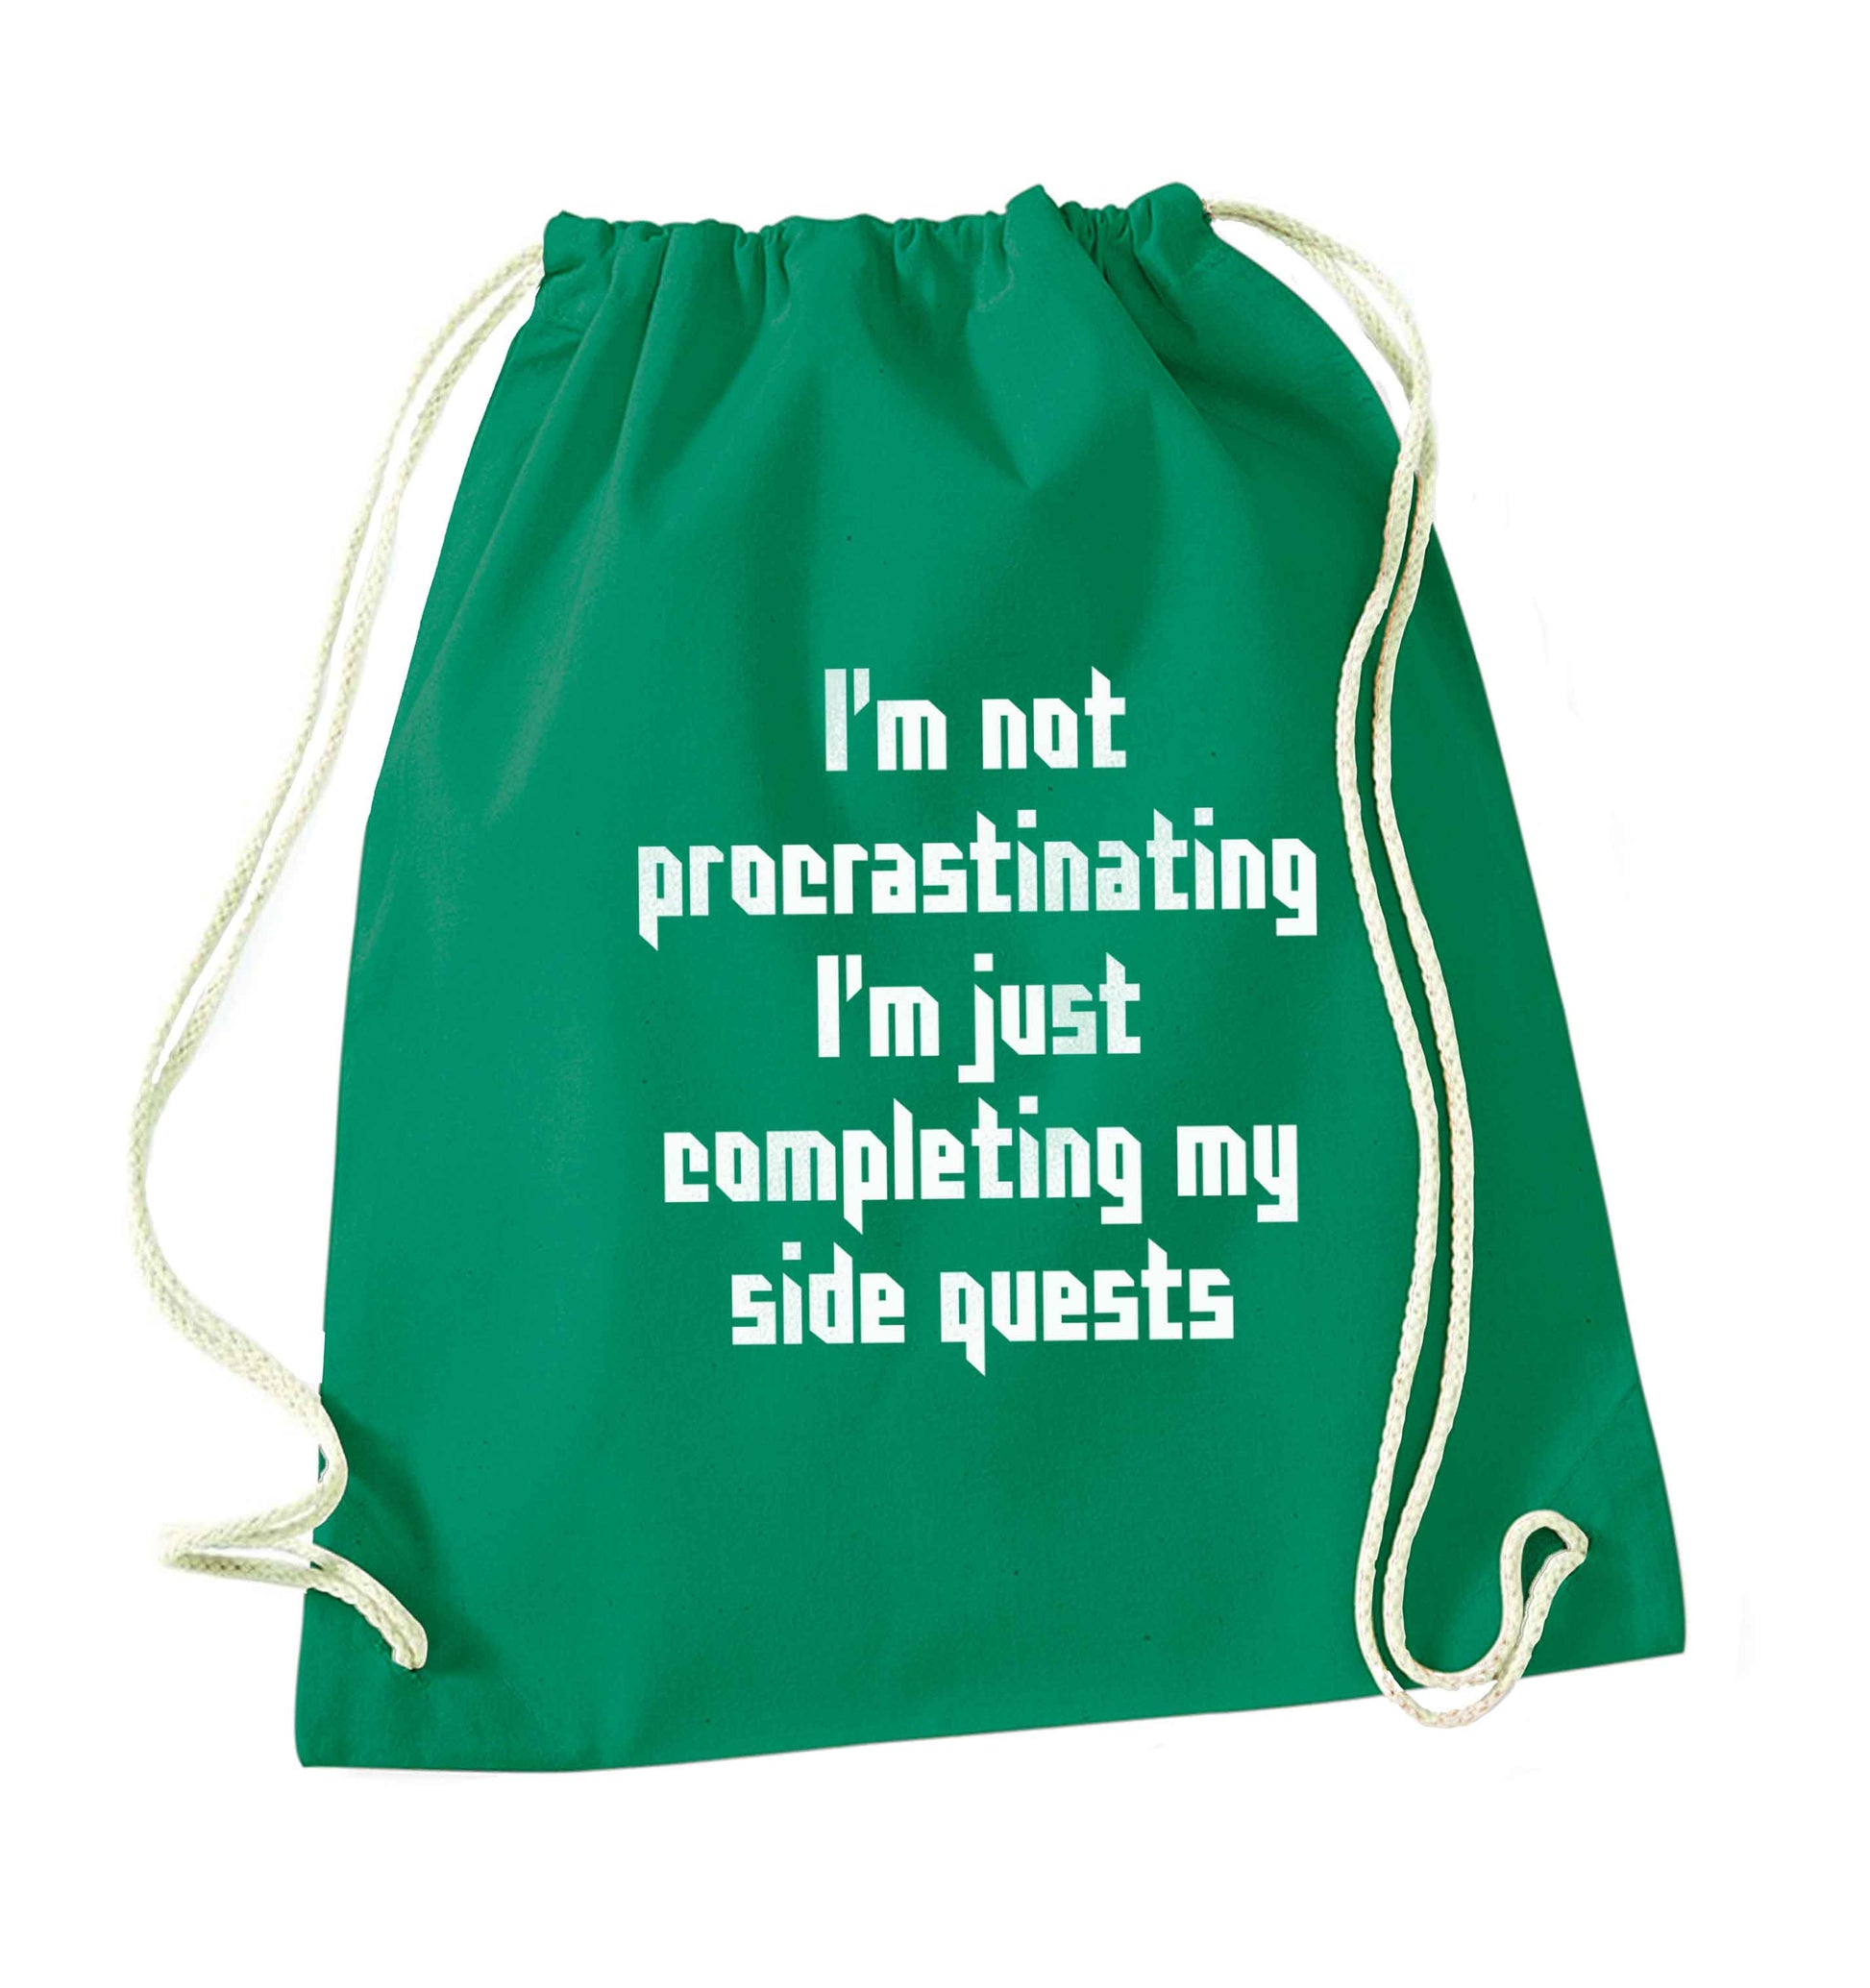 I'm not procrastinating I'm just completing my side quests green drawstring bag